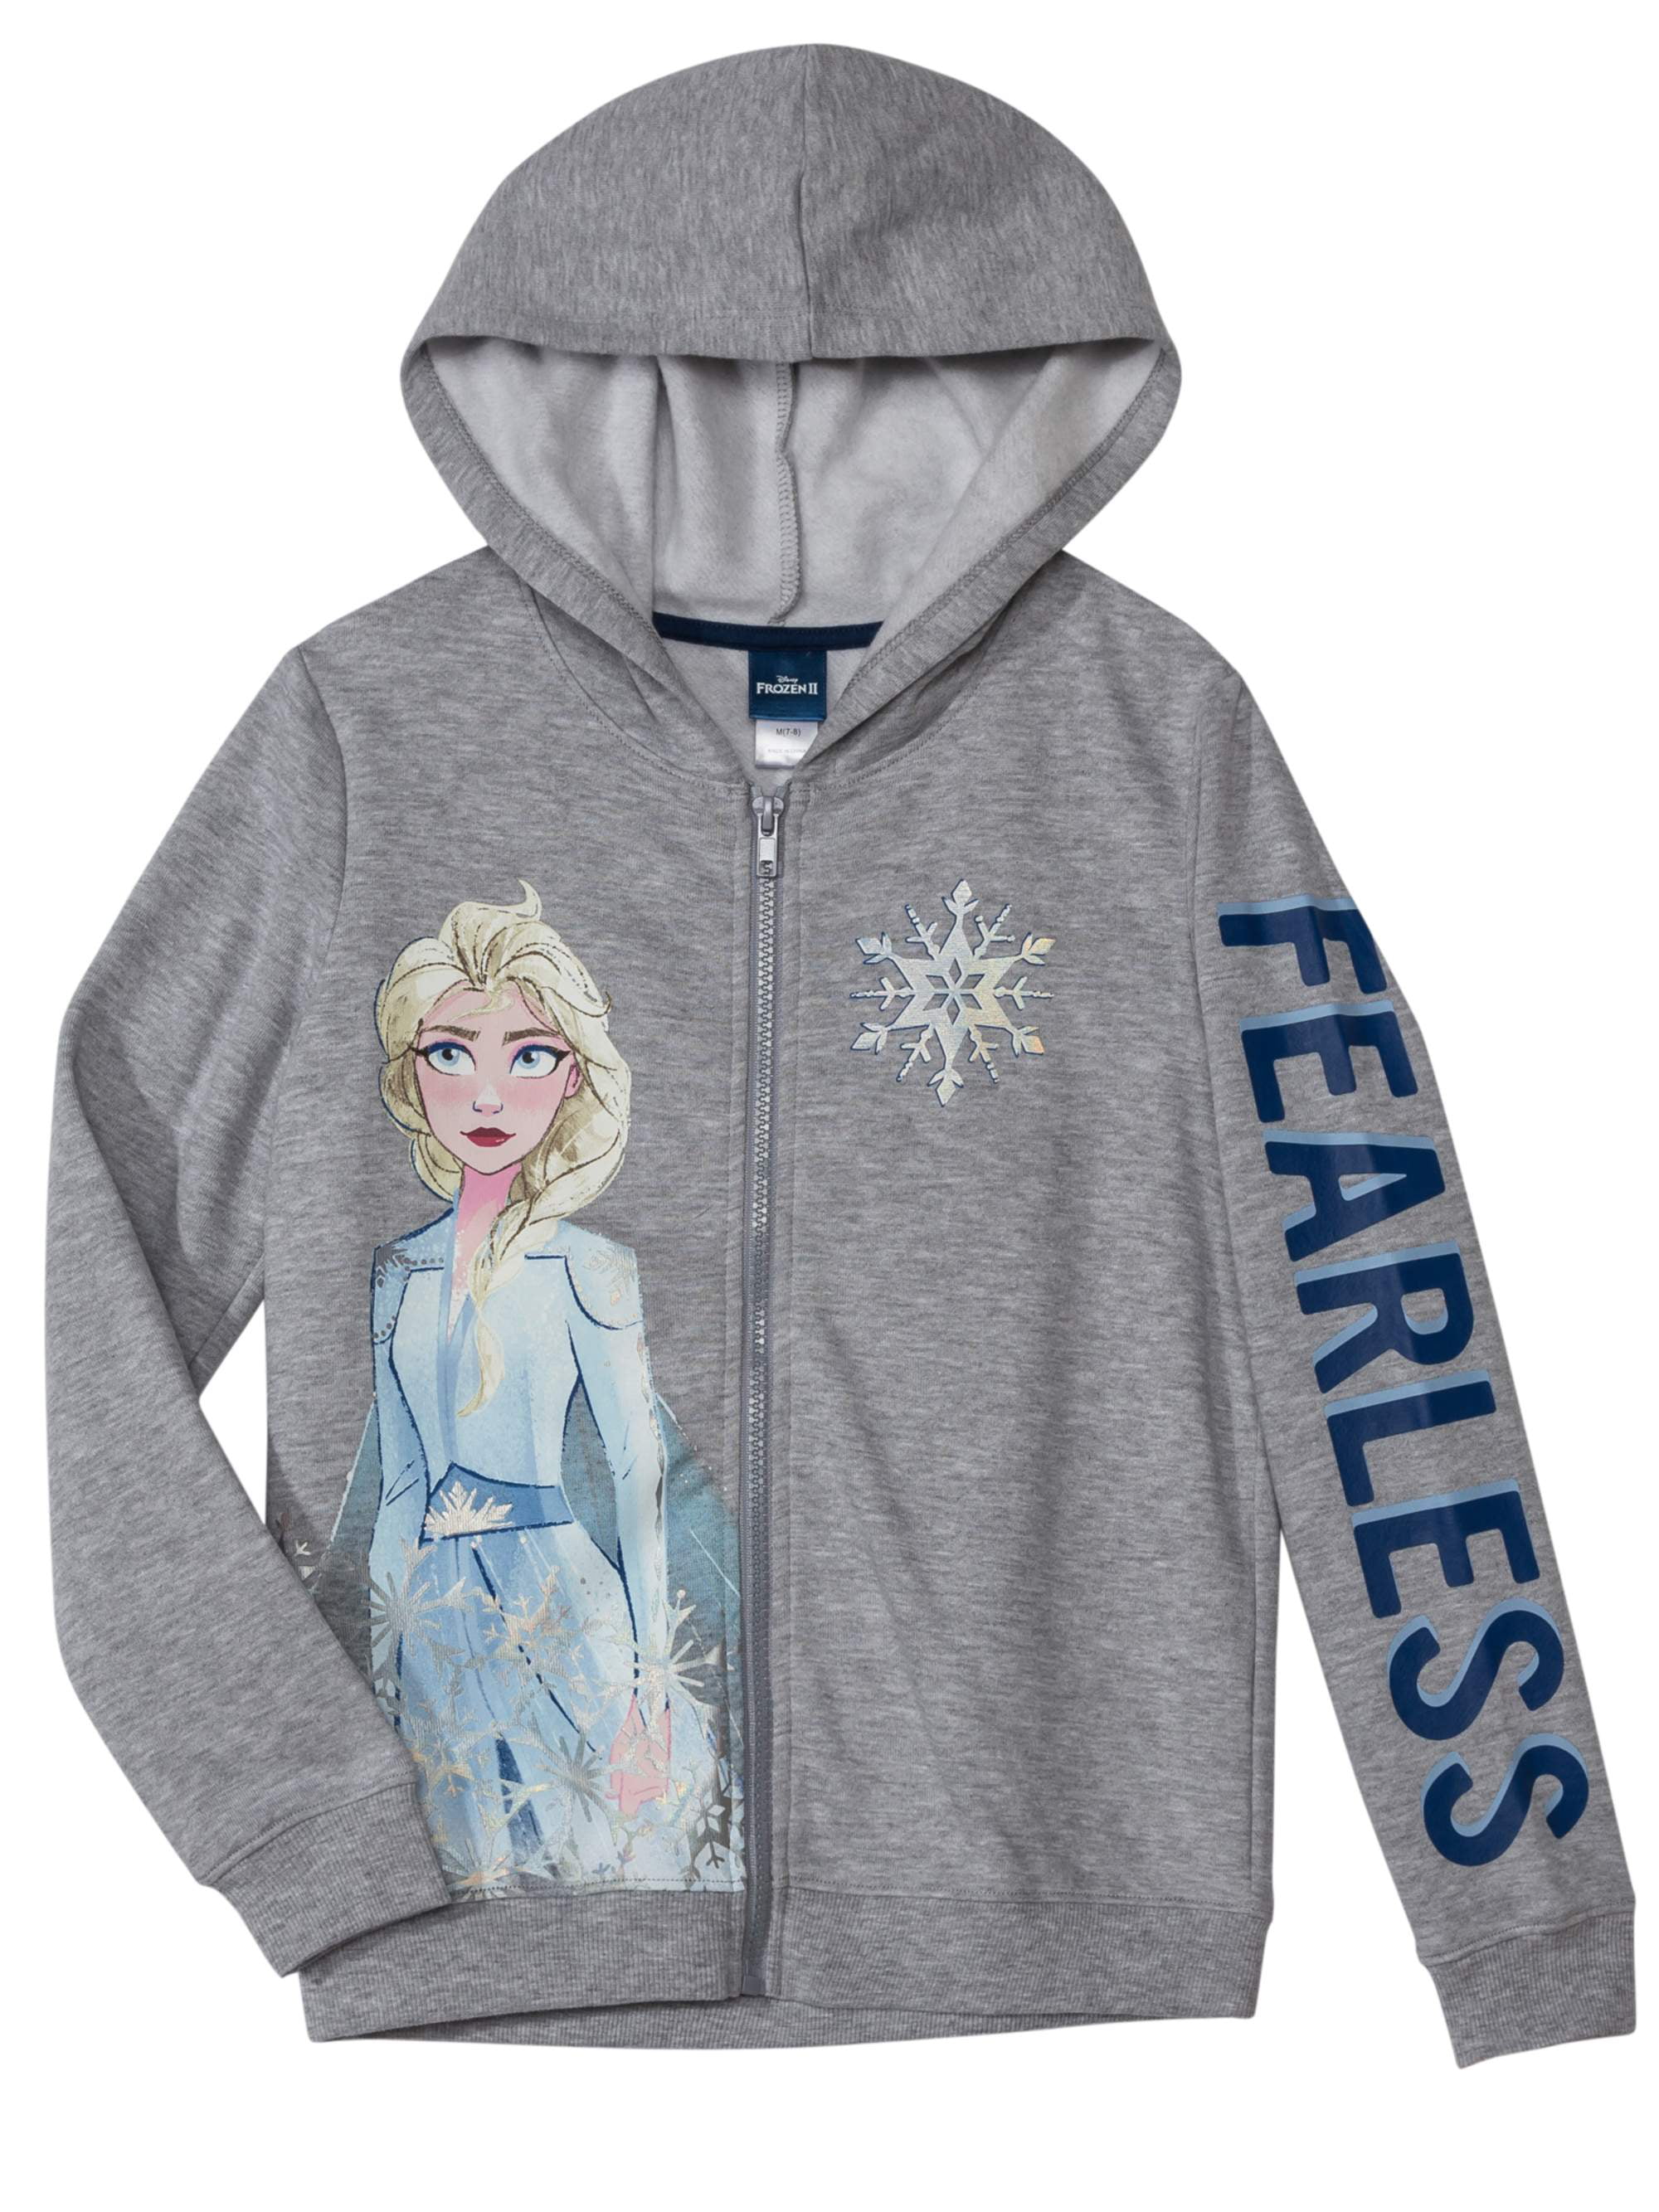 Girls Disney Frozen Sweatshirt with Hood/Sweat Jacket/Jacket age 4-10 years 